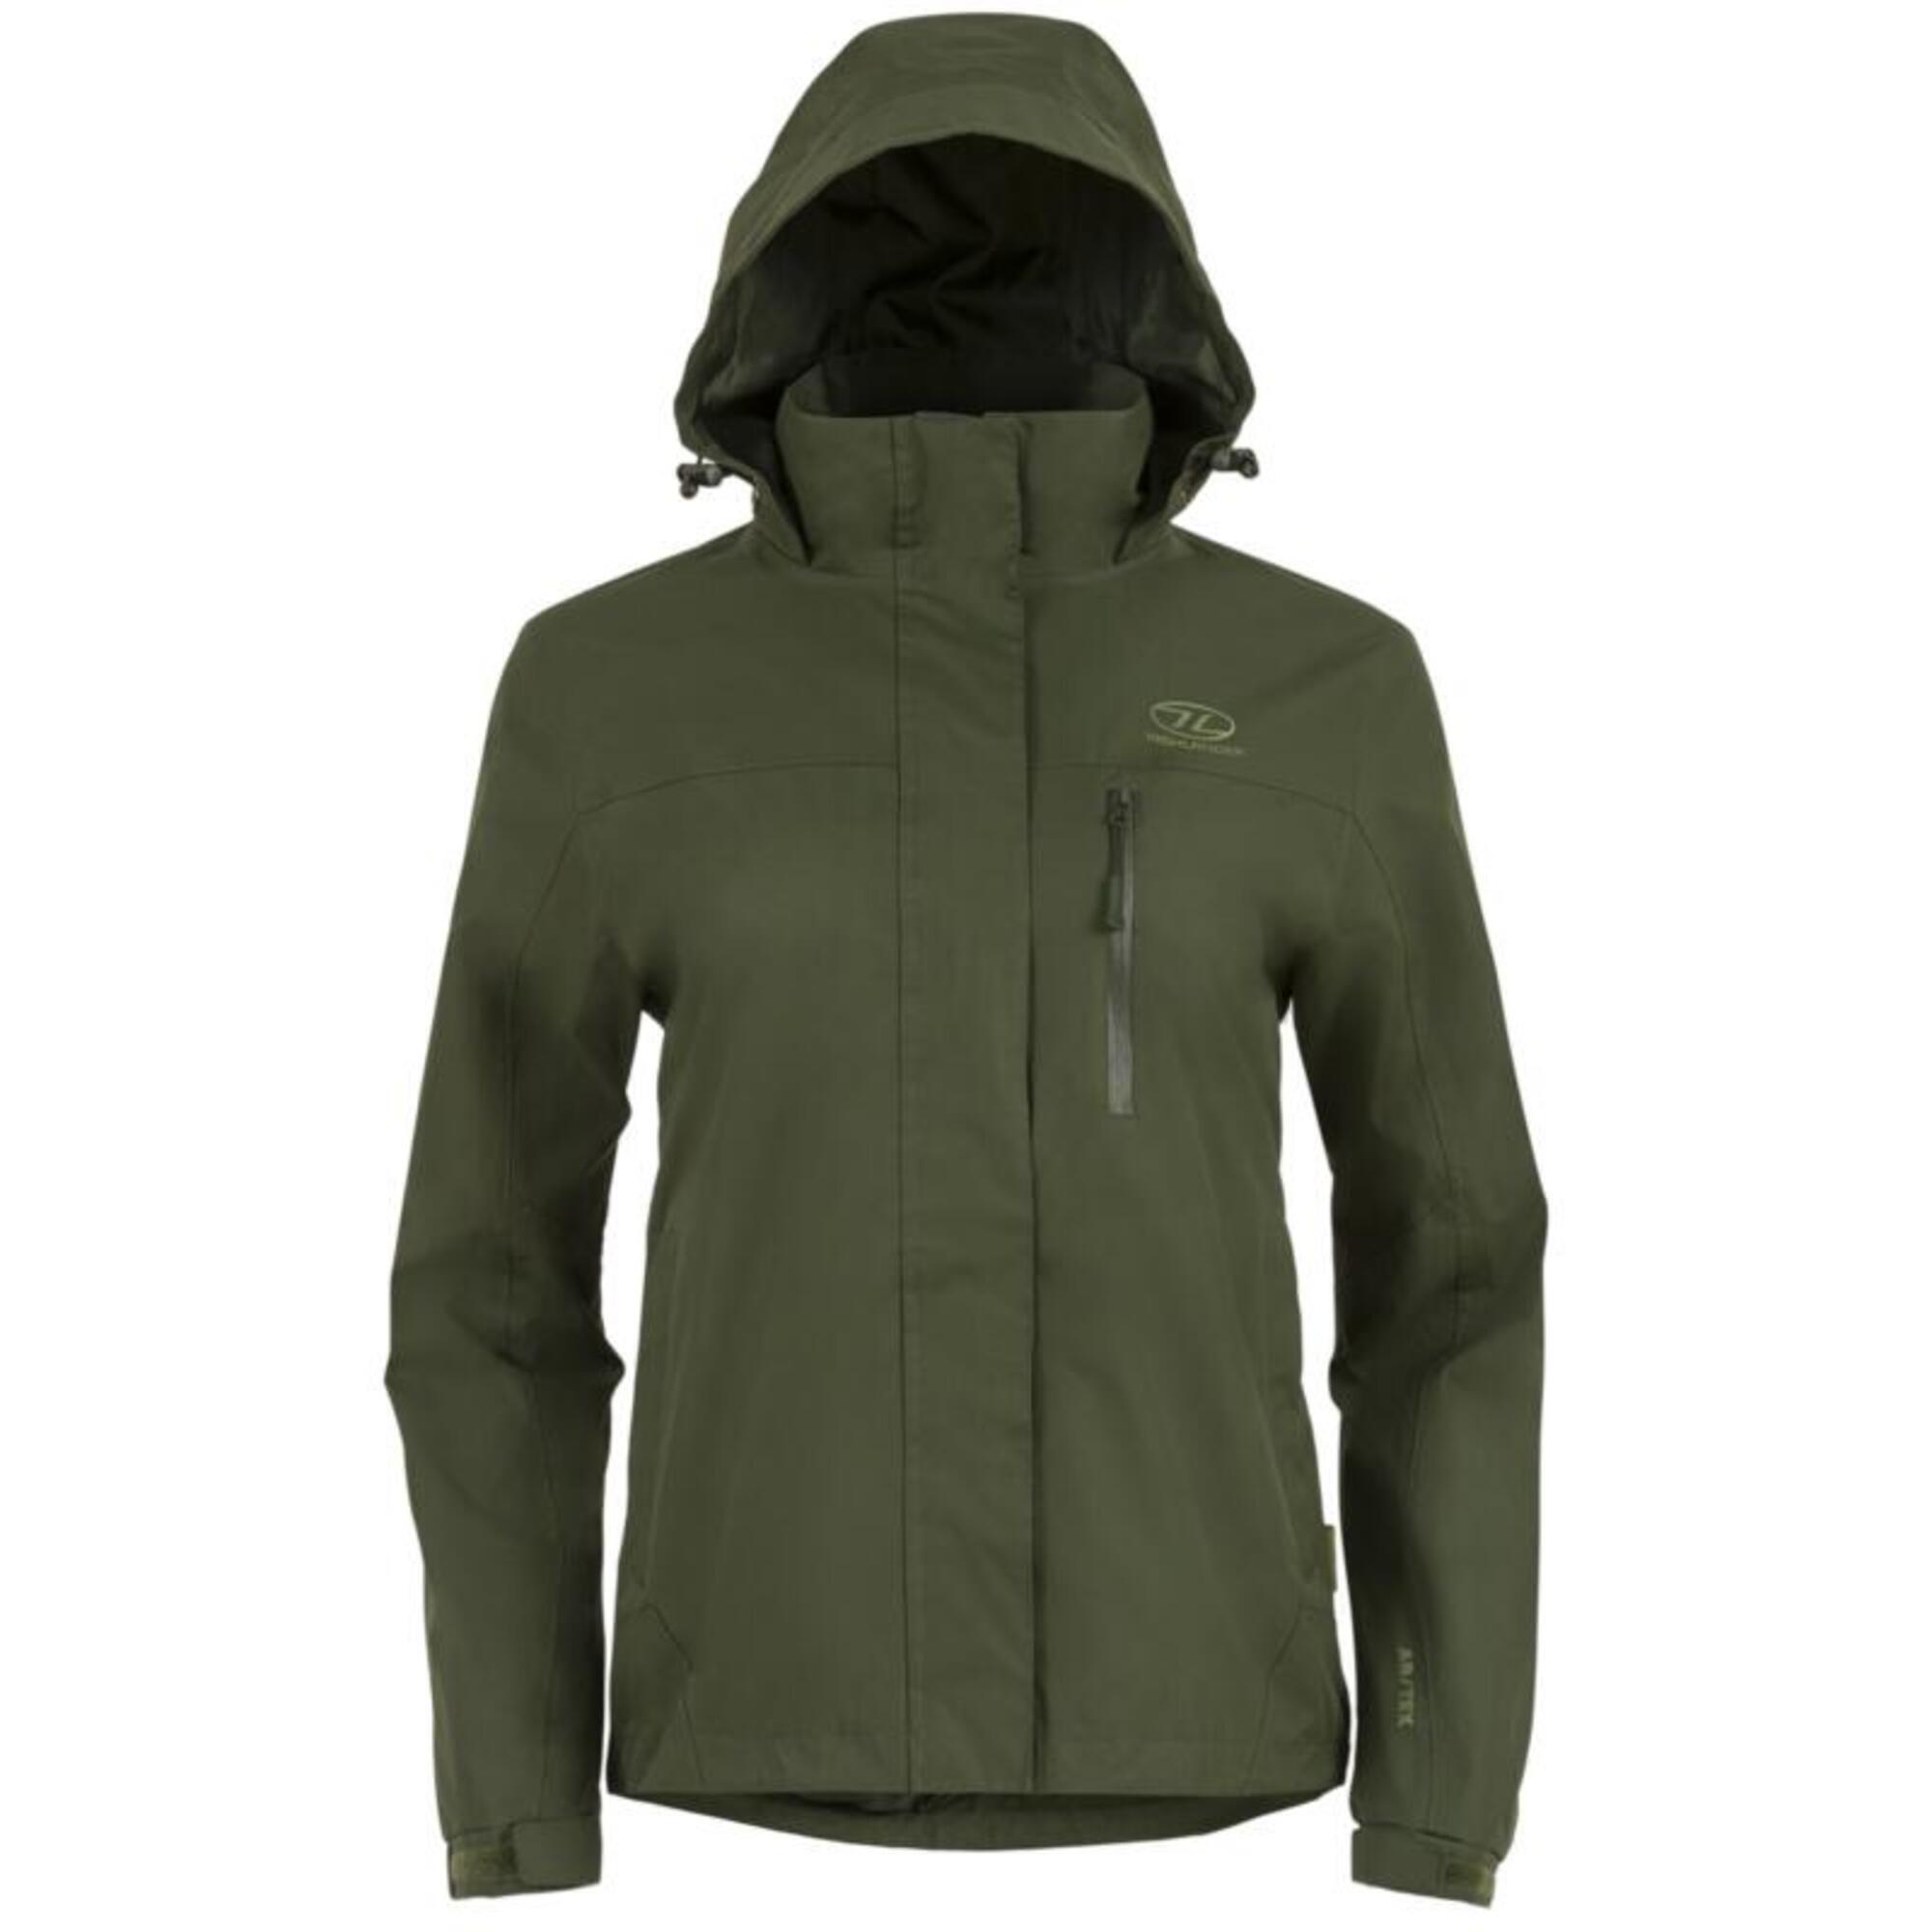 Veste outdoor Kerrera Jacket pour femme - imperméable - Vert